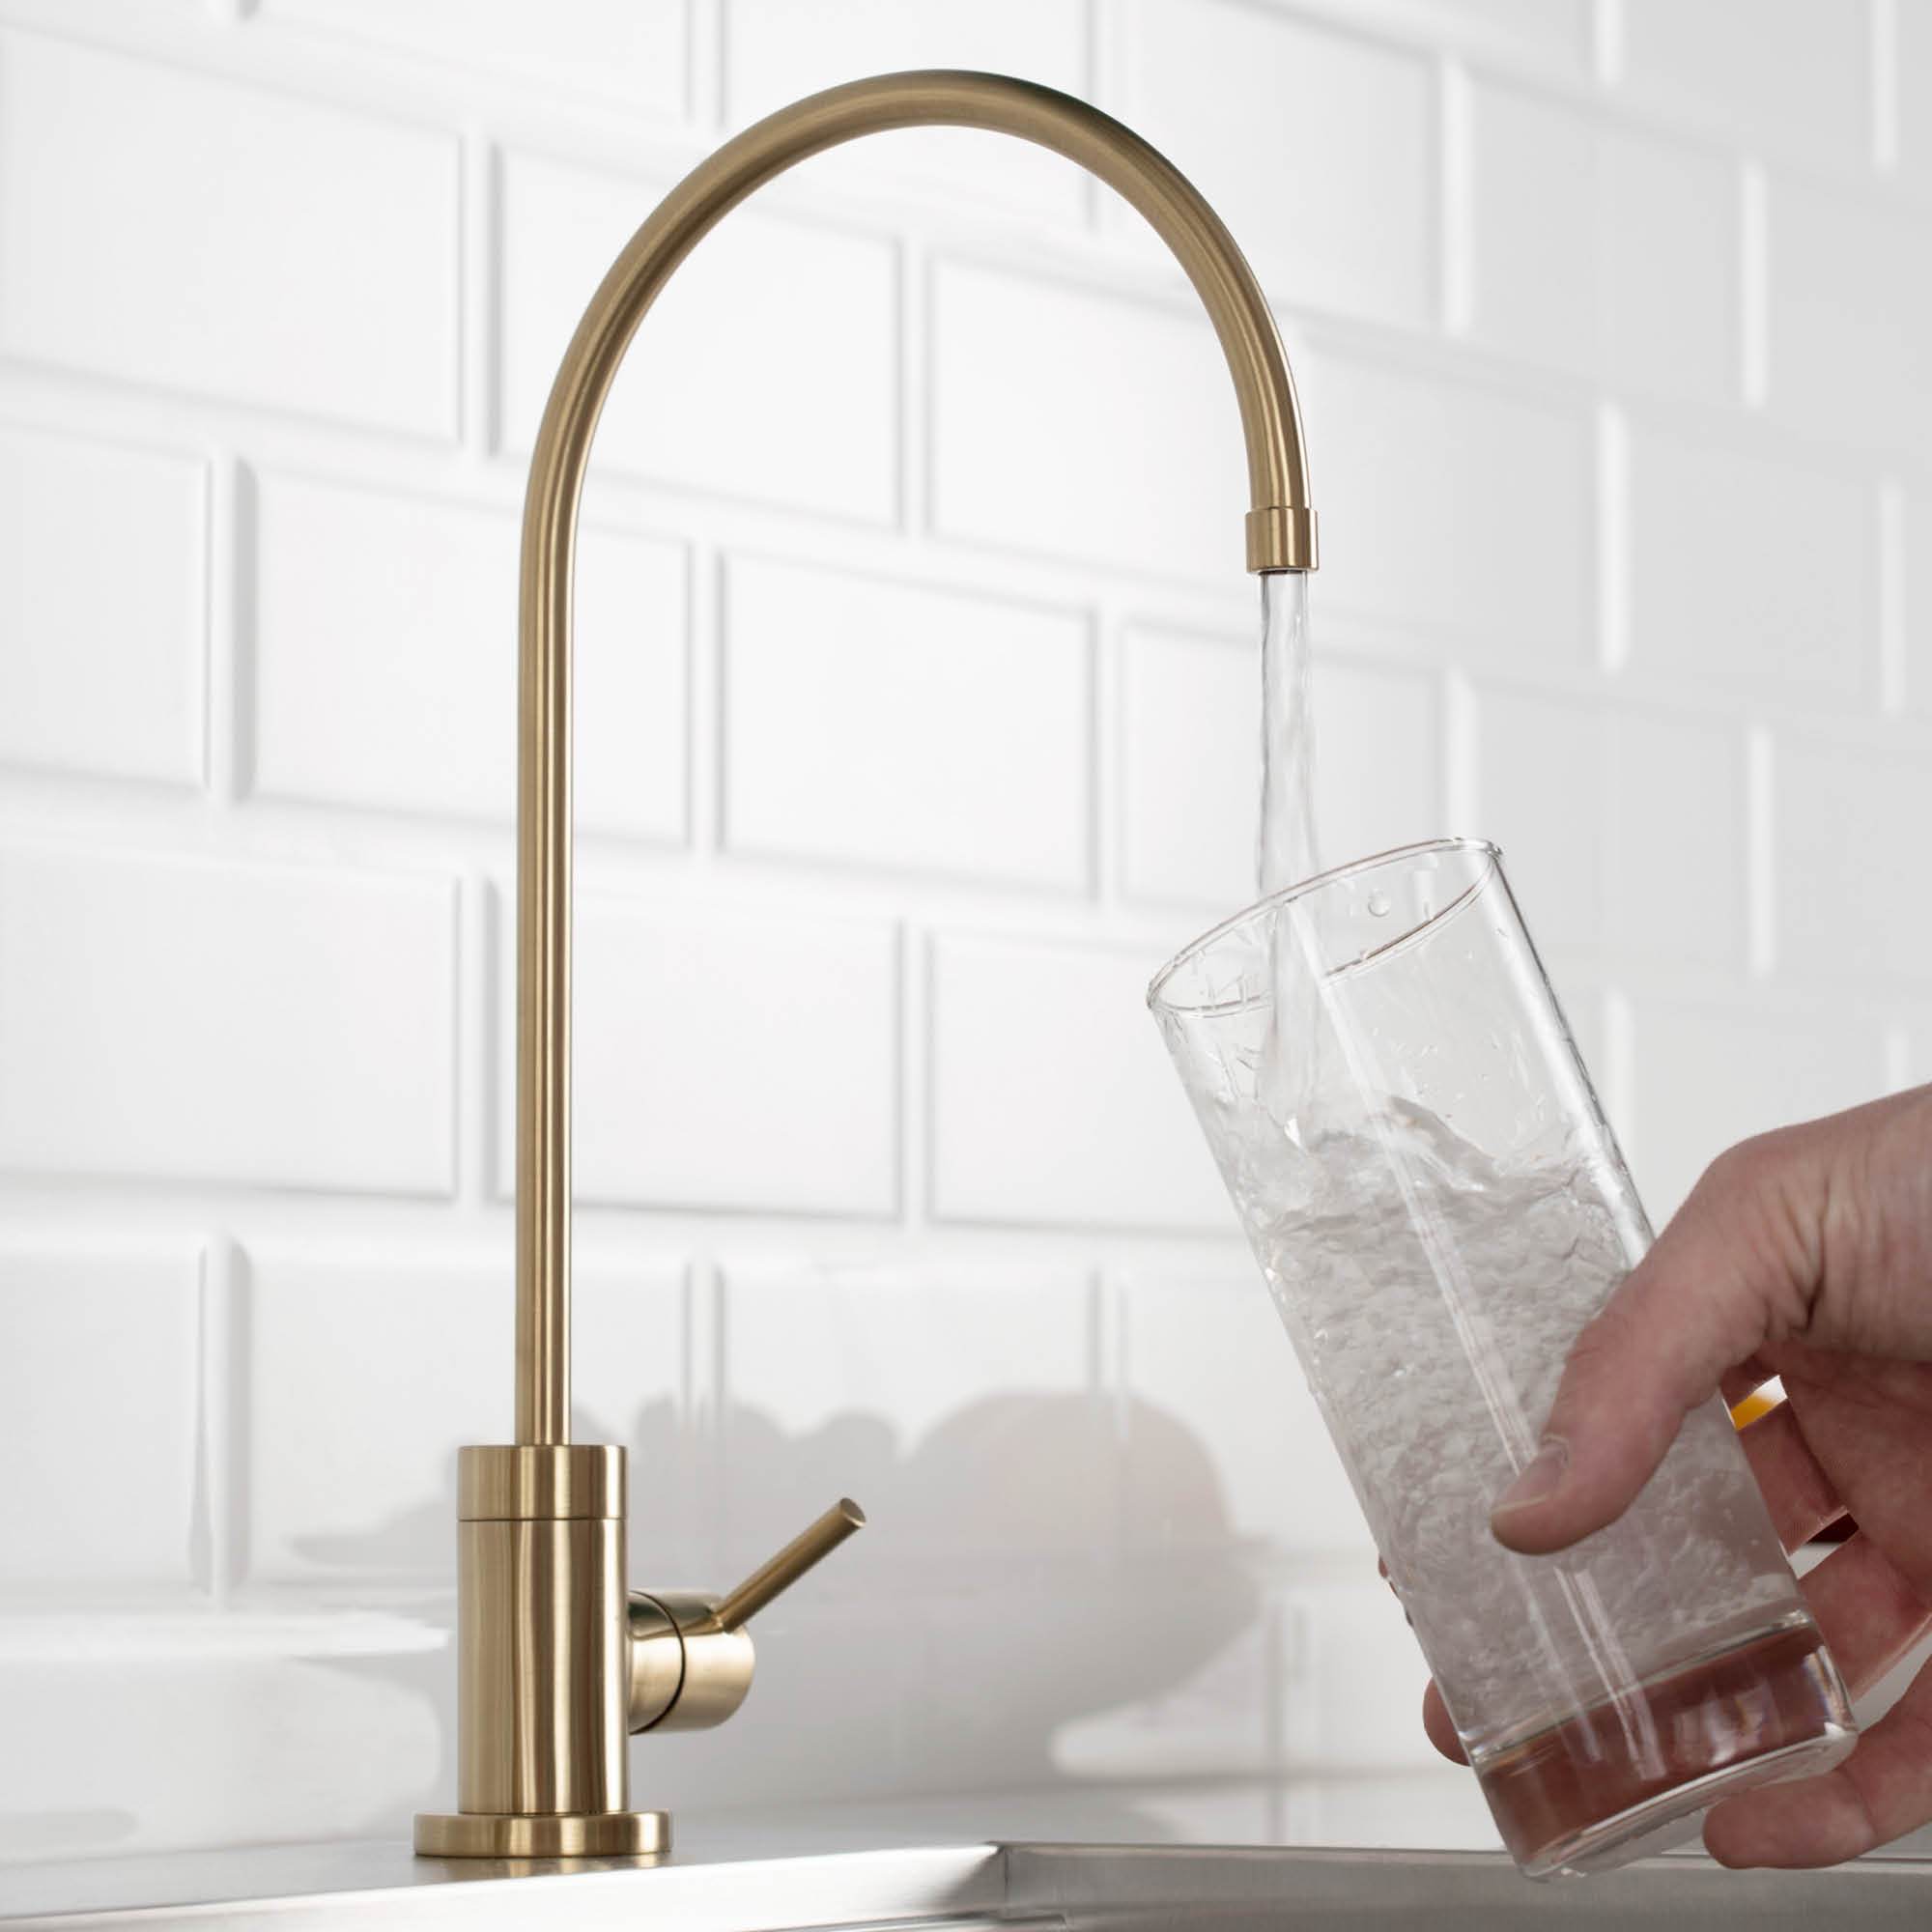 KRAUS Purita 100% Lead-Free Kitchen Water Filter Faucet in Brushed Gold